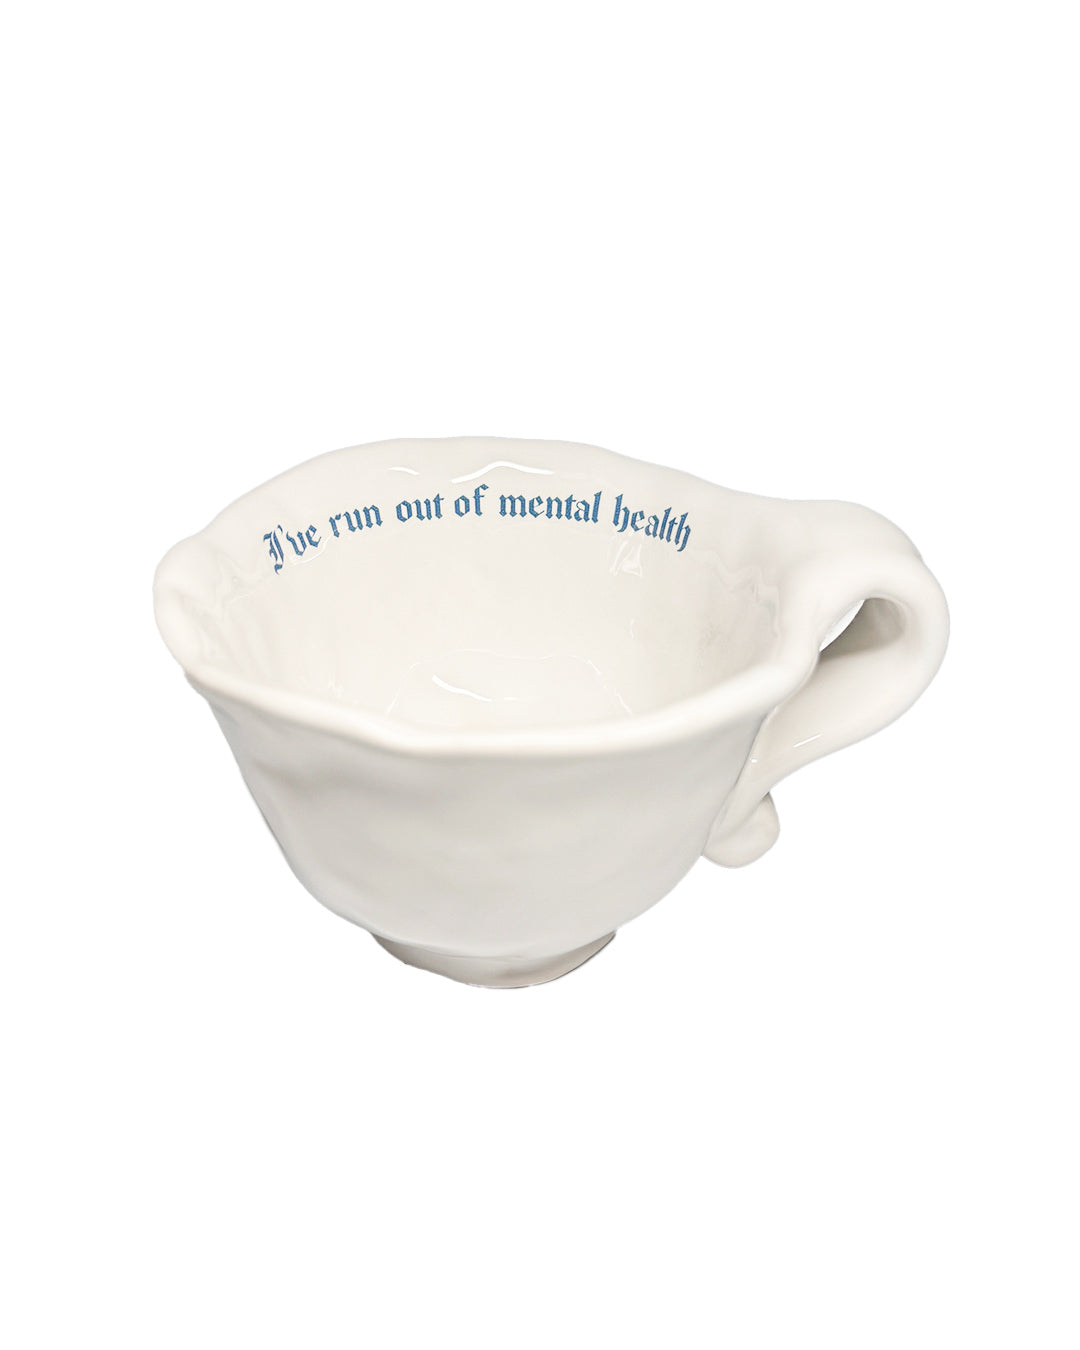 Handmade cappuccino cup with gothic text - Sassy - Incartato Ceramics